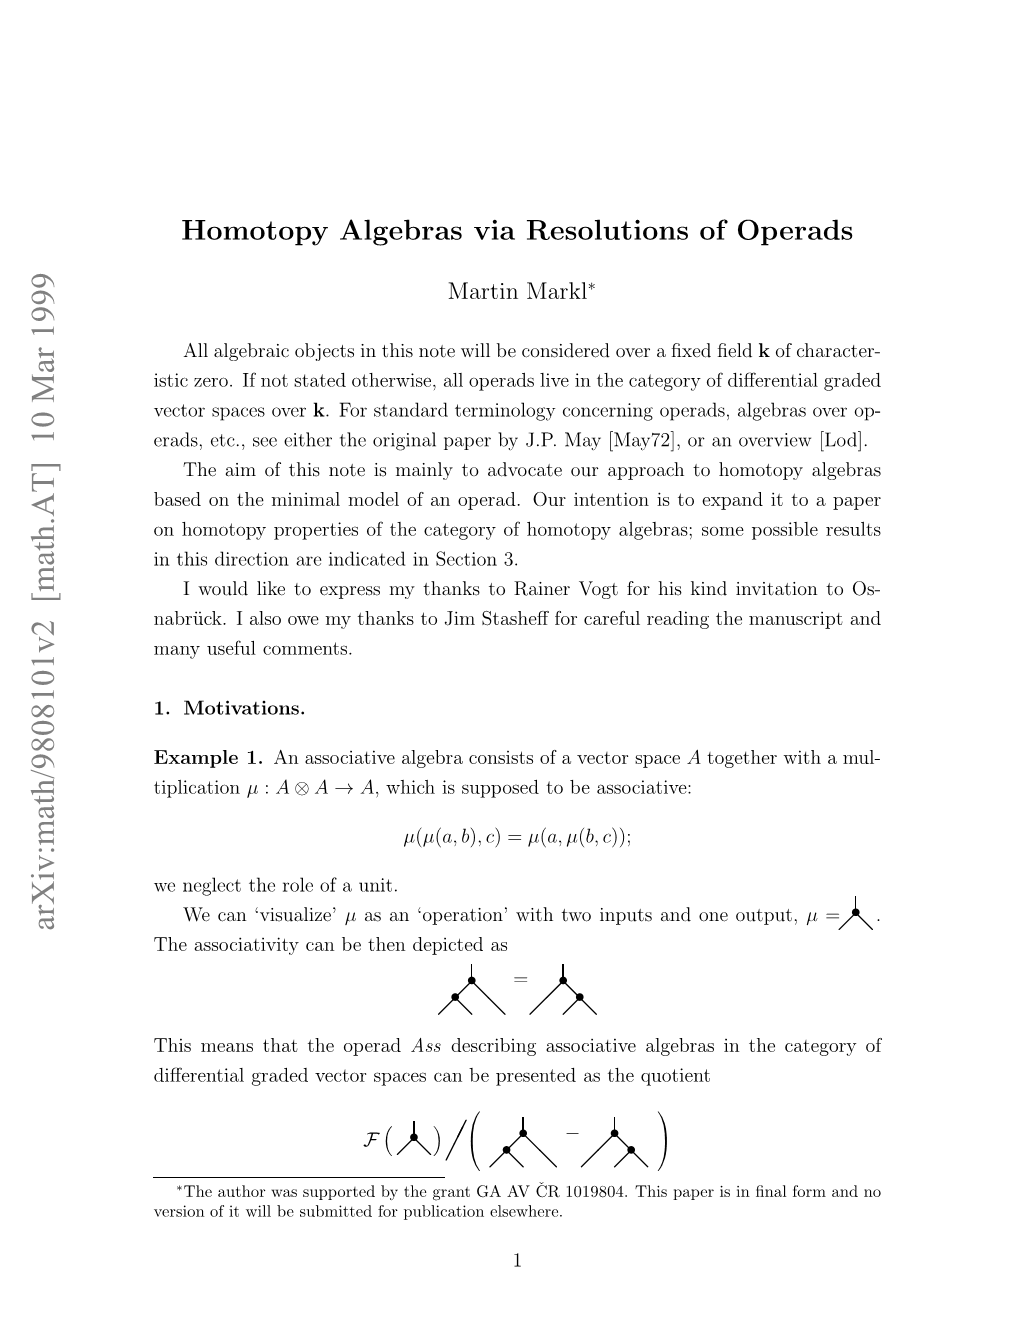 Homotopy Algebras Via Resolutions of Operads